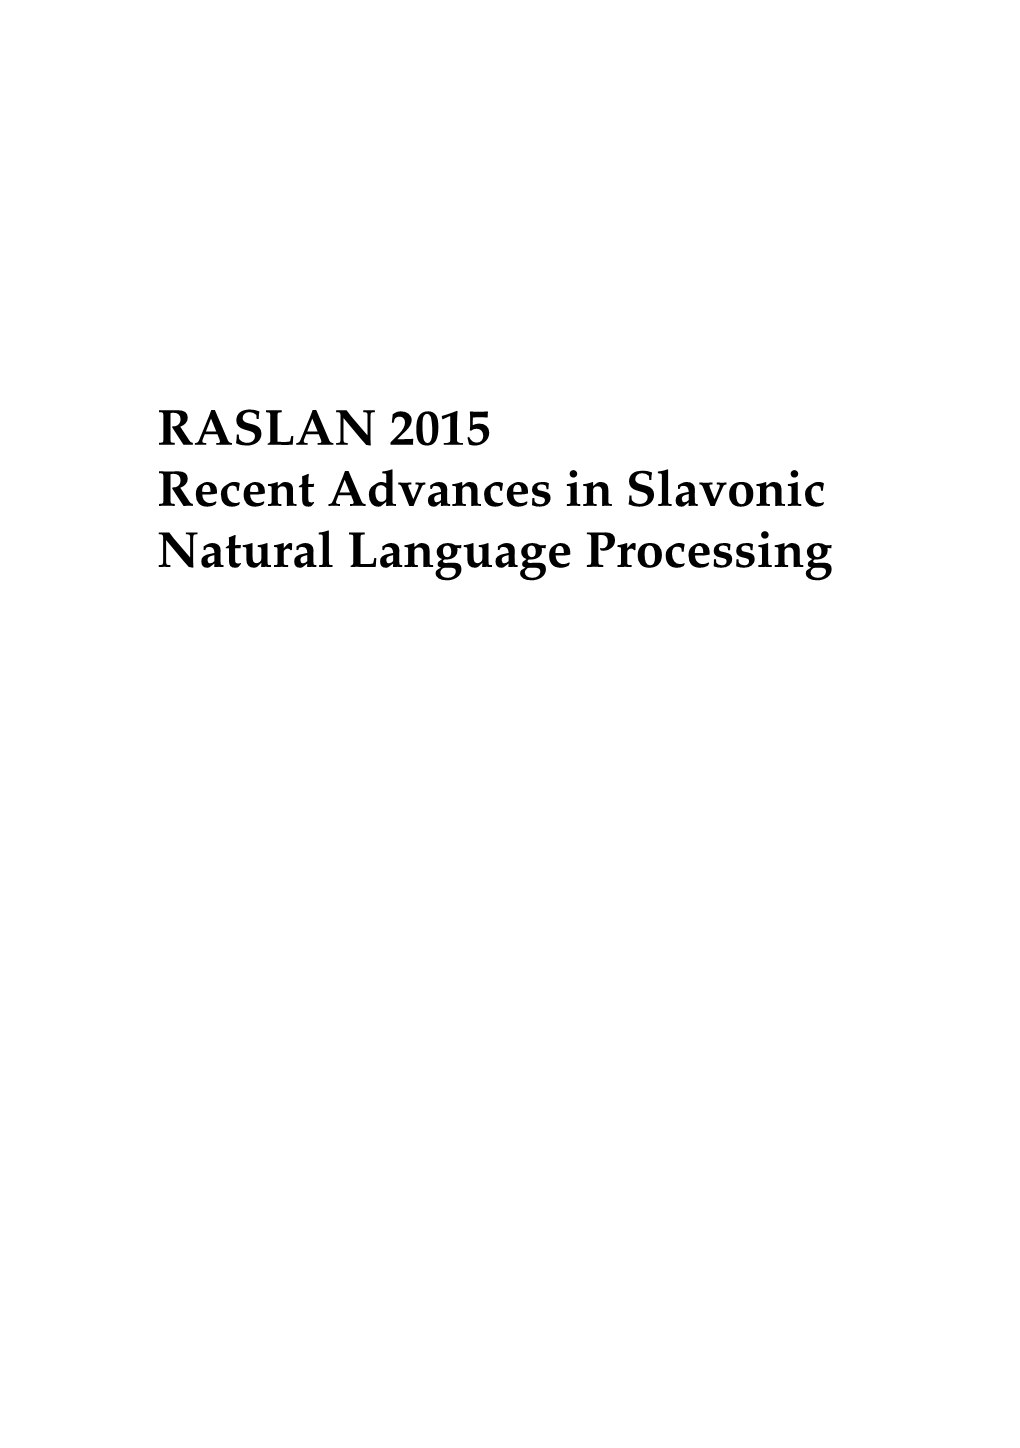 RASLAN 2015 Recent Advances in Slavonic Natural Language Processing